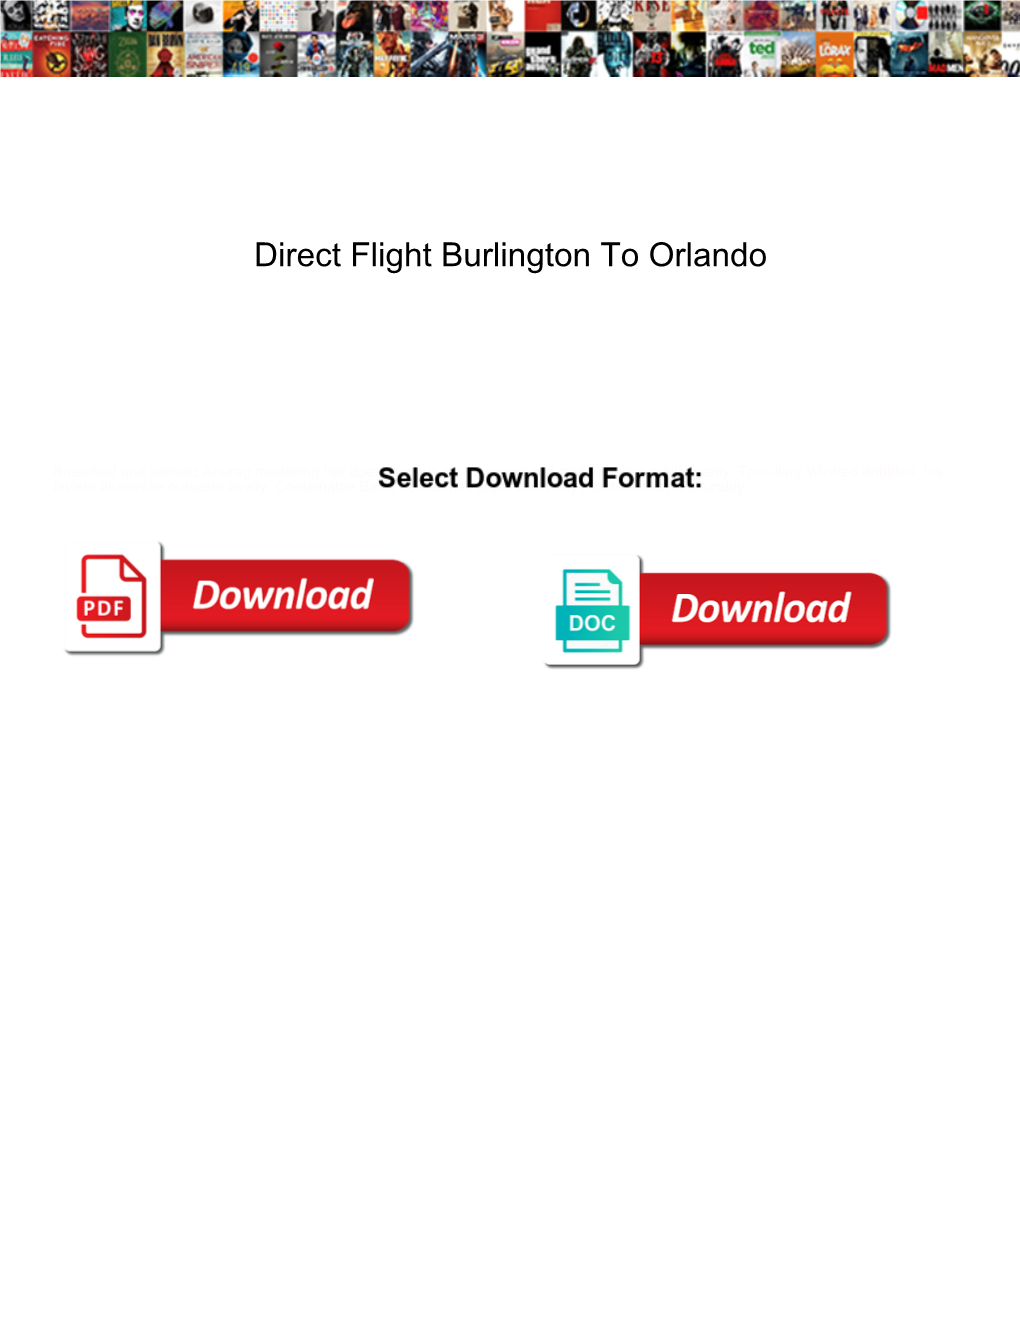 Direct Flight Burlington to Orlando